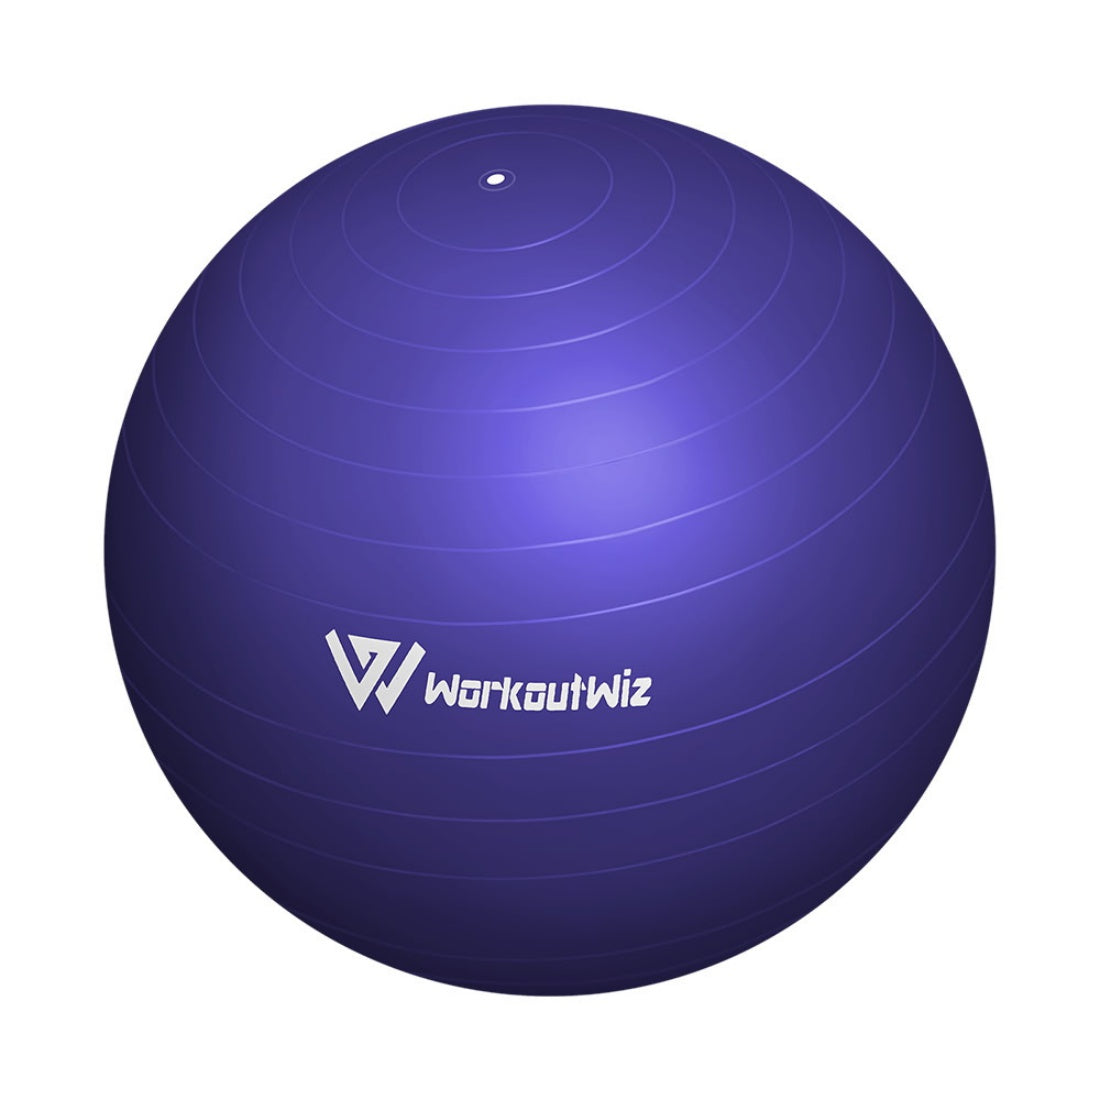 Home Gym Exercise Fitness Swiss Ball 75 Diameter Purple